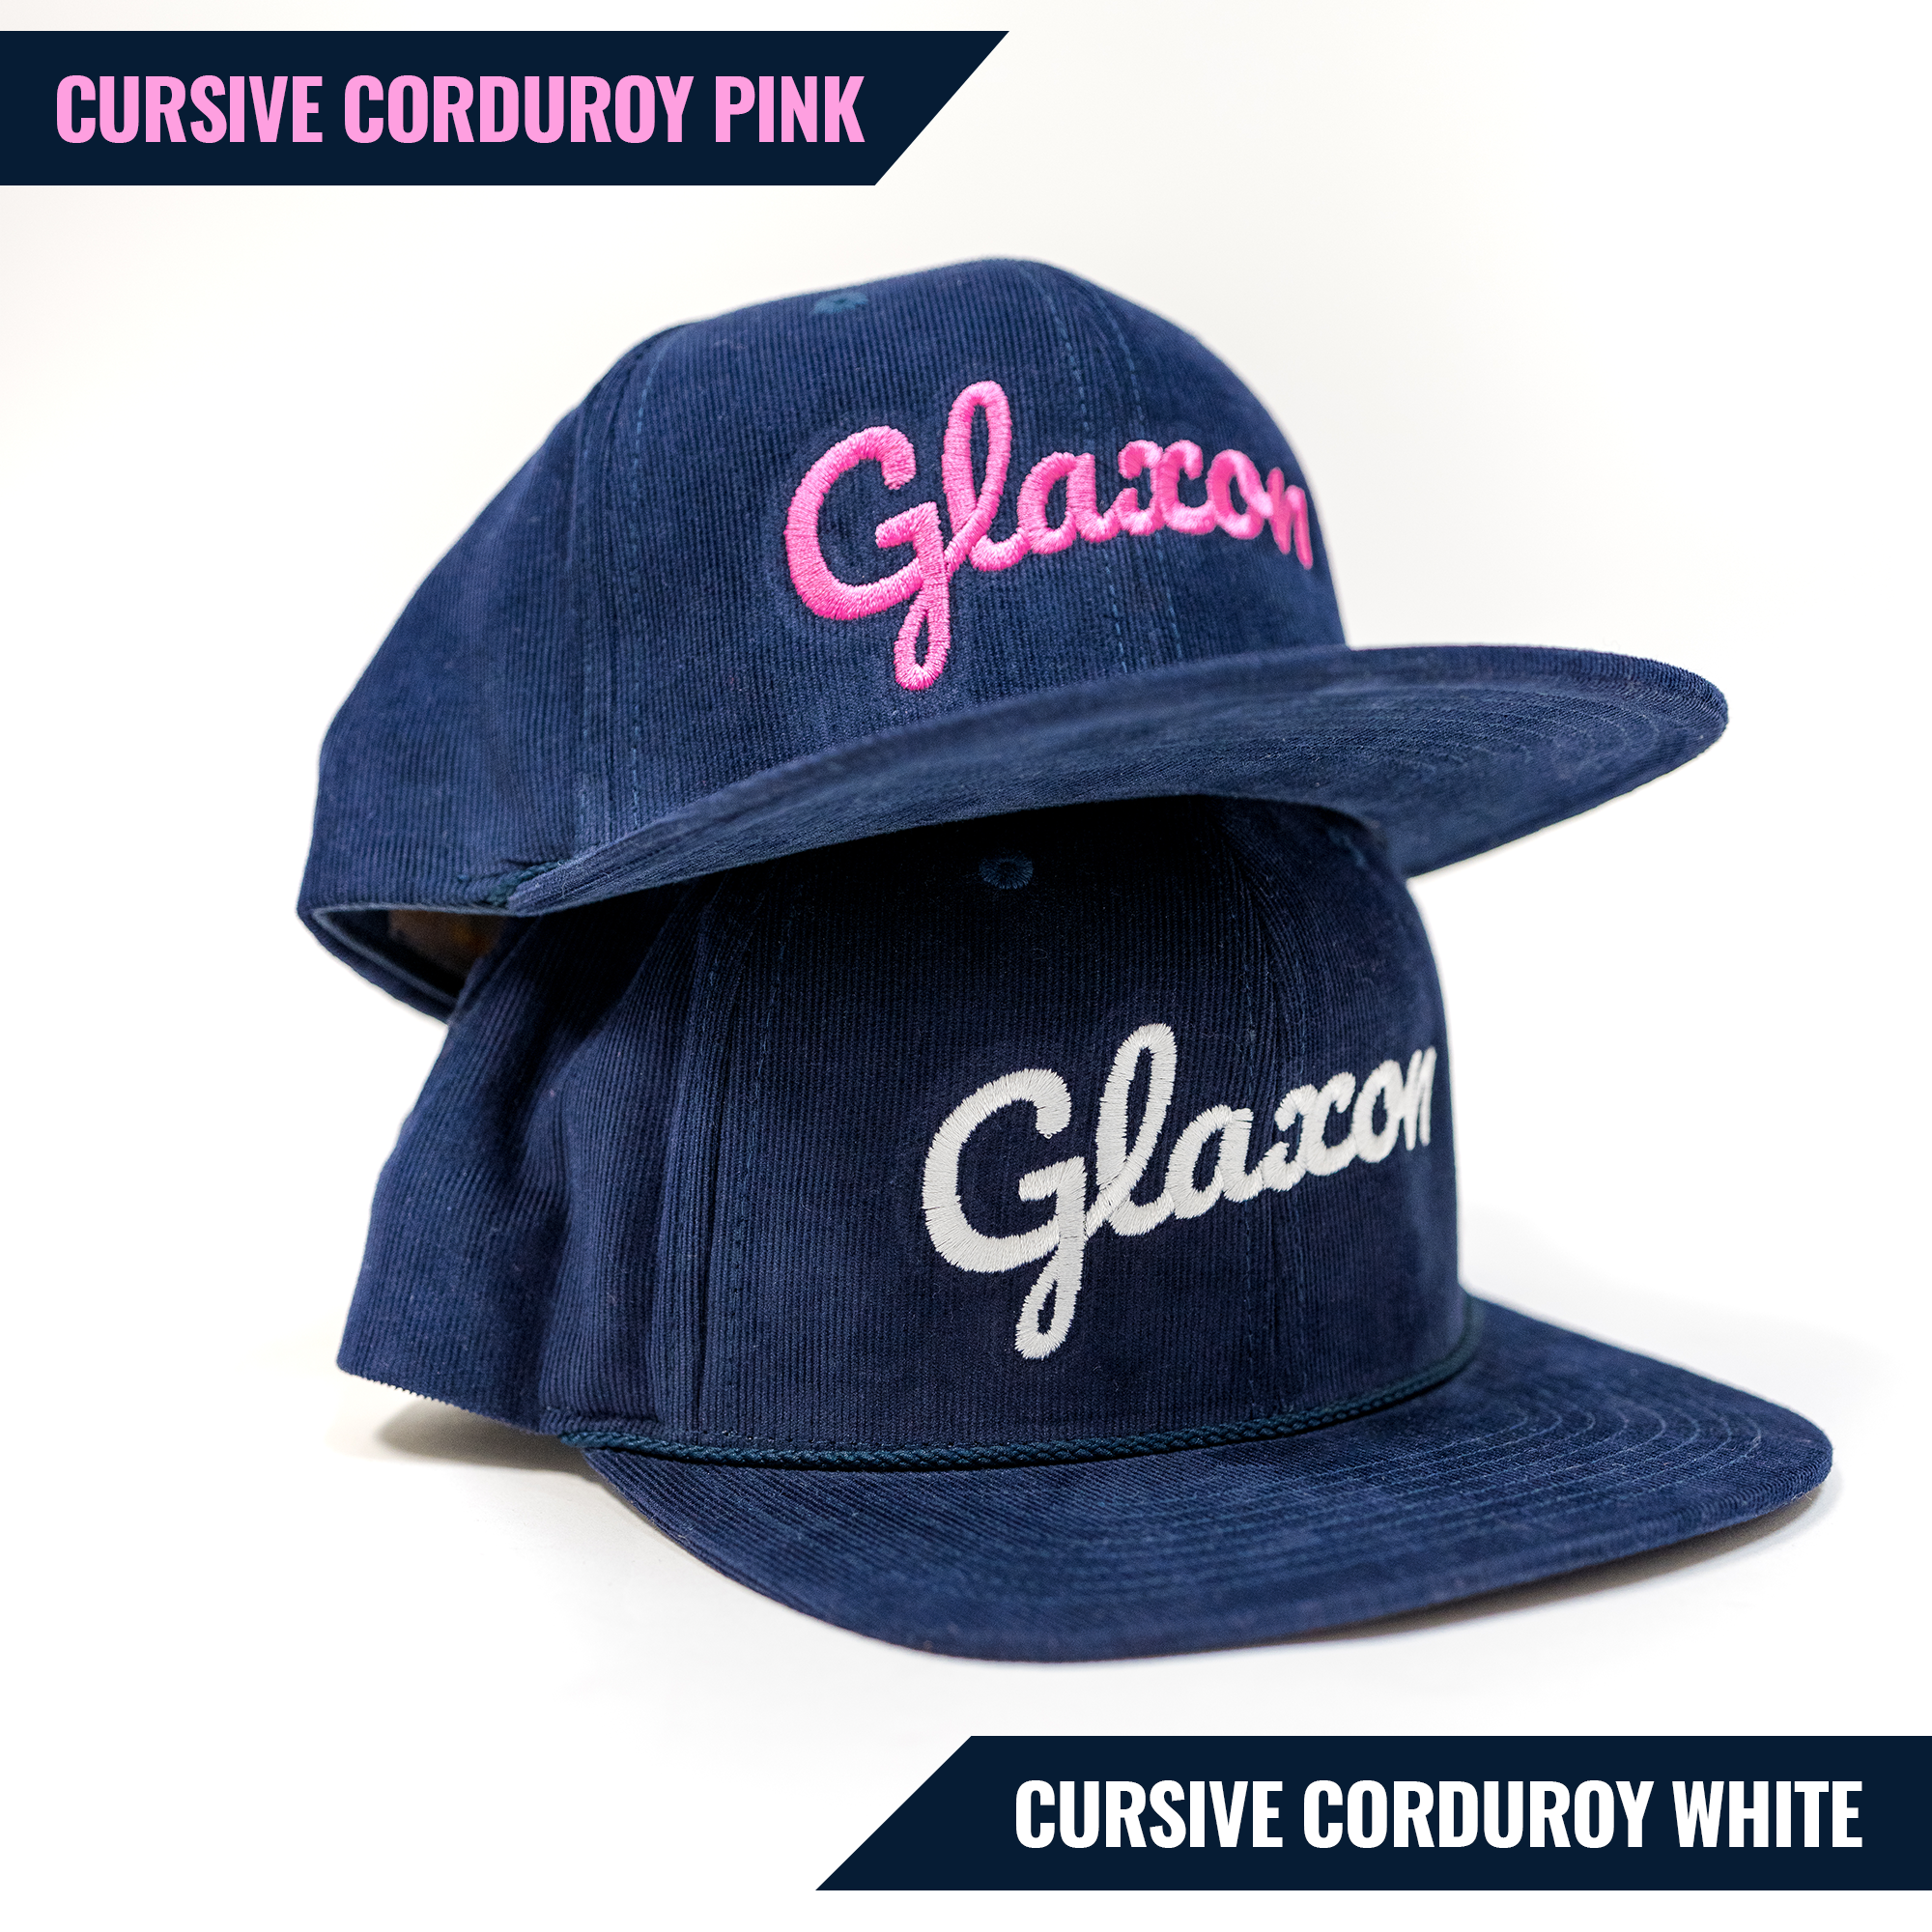 Glaxon Cursive Corduroy Snapback (Limited Edition)